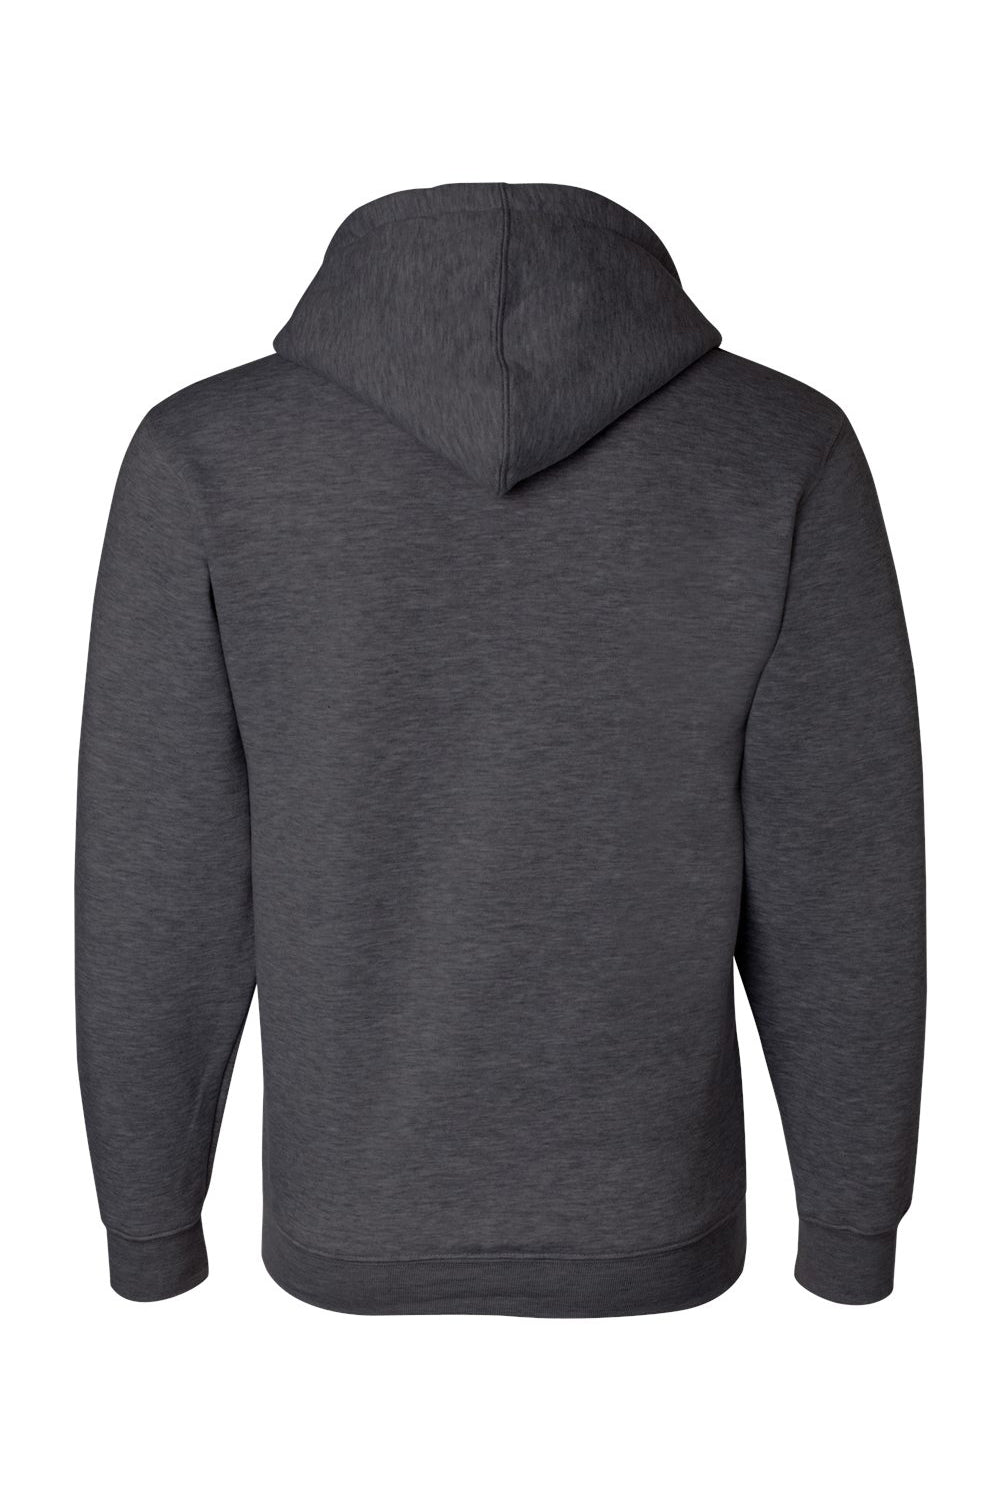 Bayside BA900 Mens USA Made Full Zip Hooded Sweatshirt Hoodie Heather Charcoal Grey Flat Back